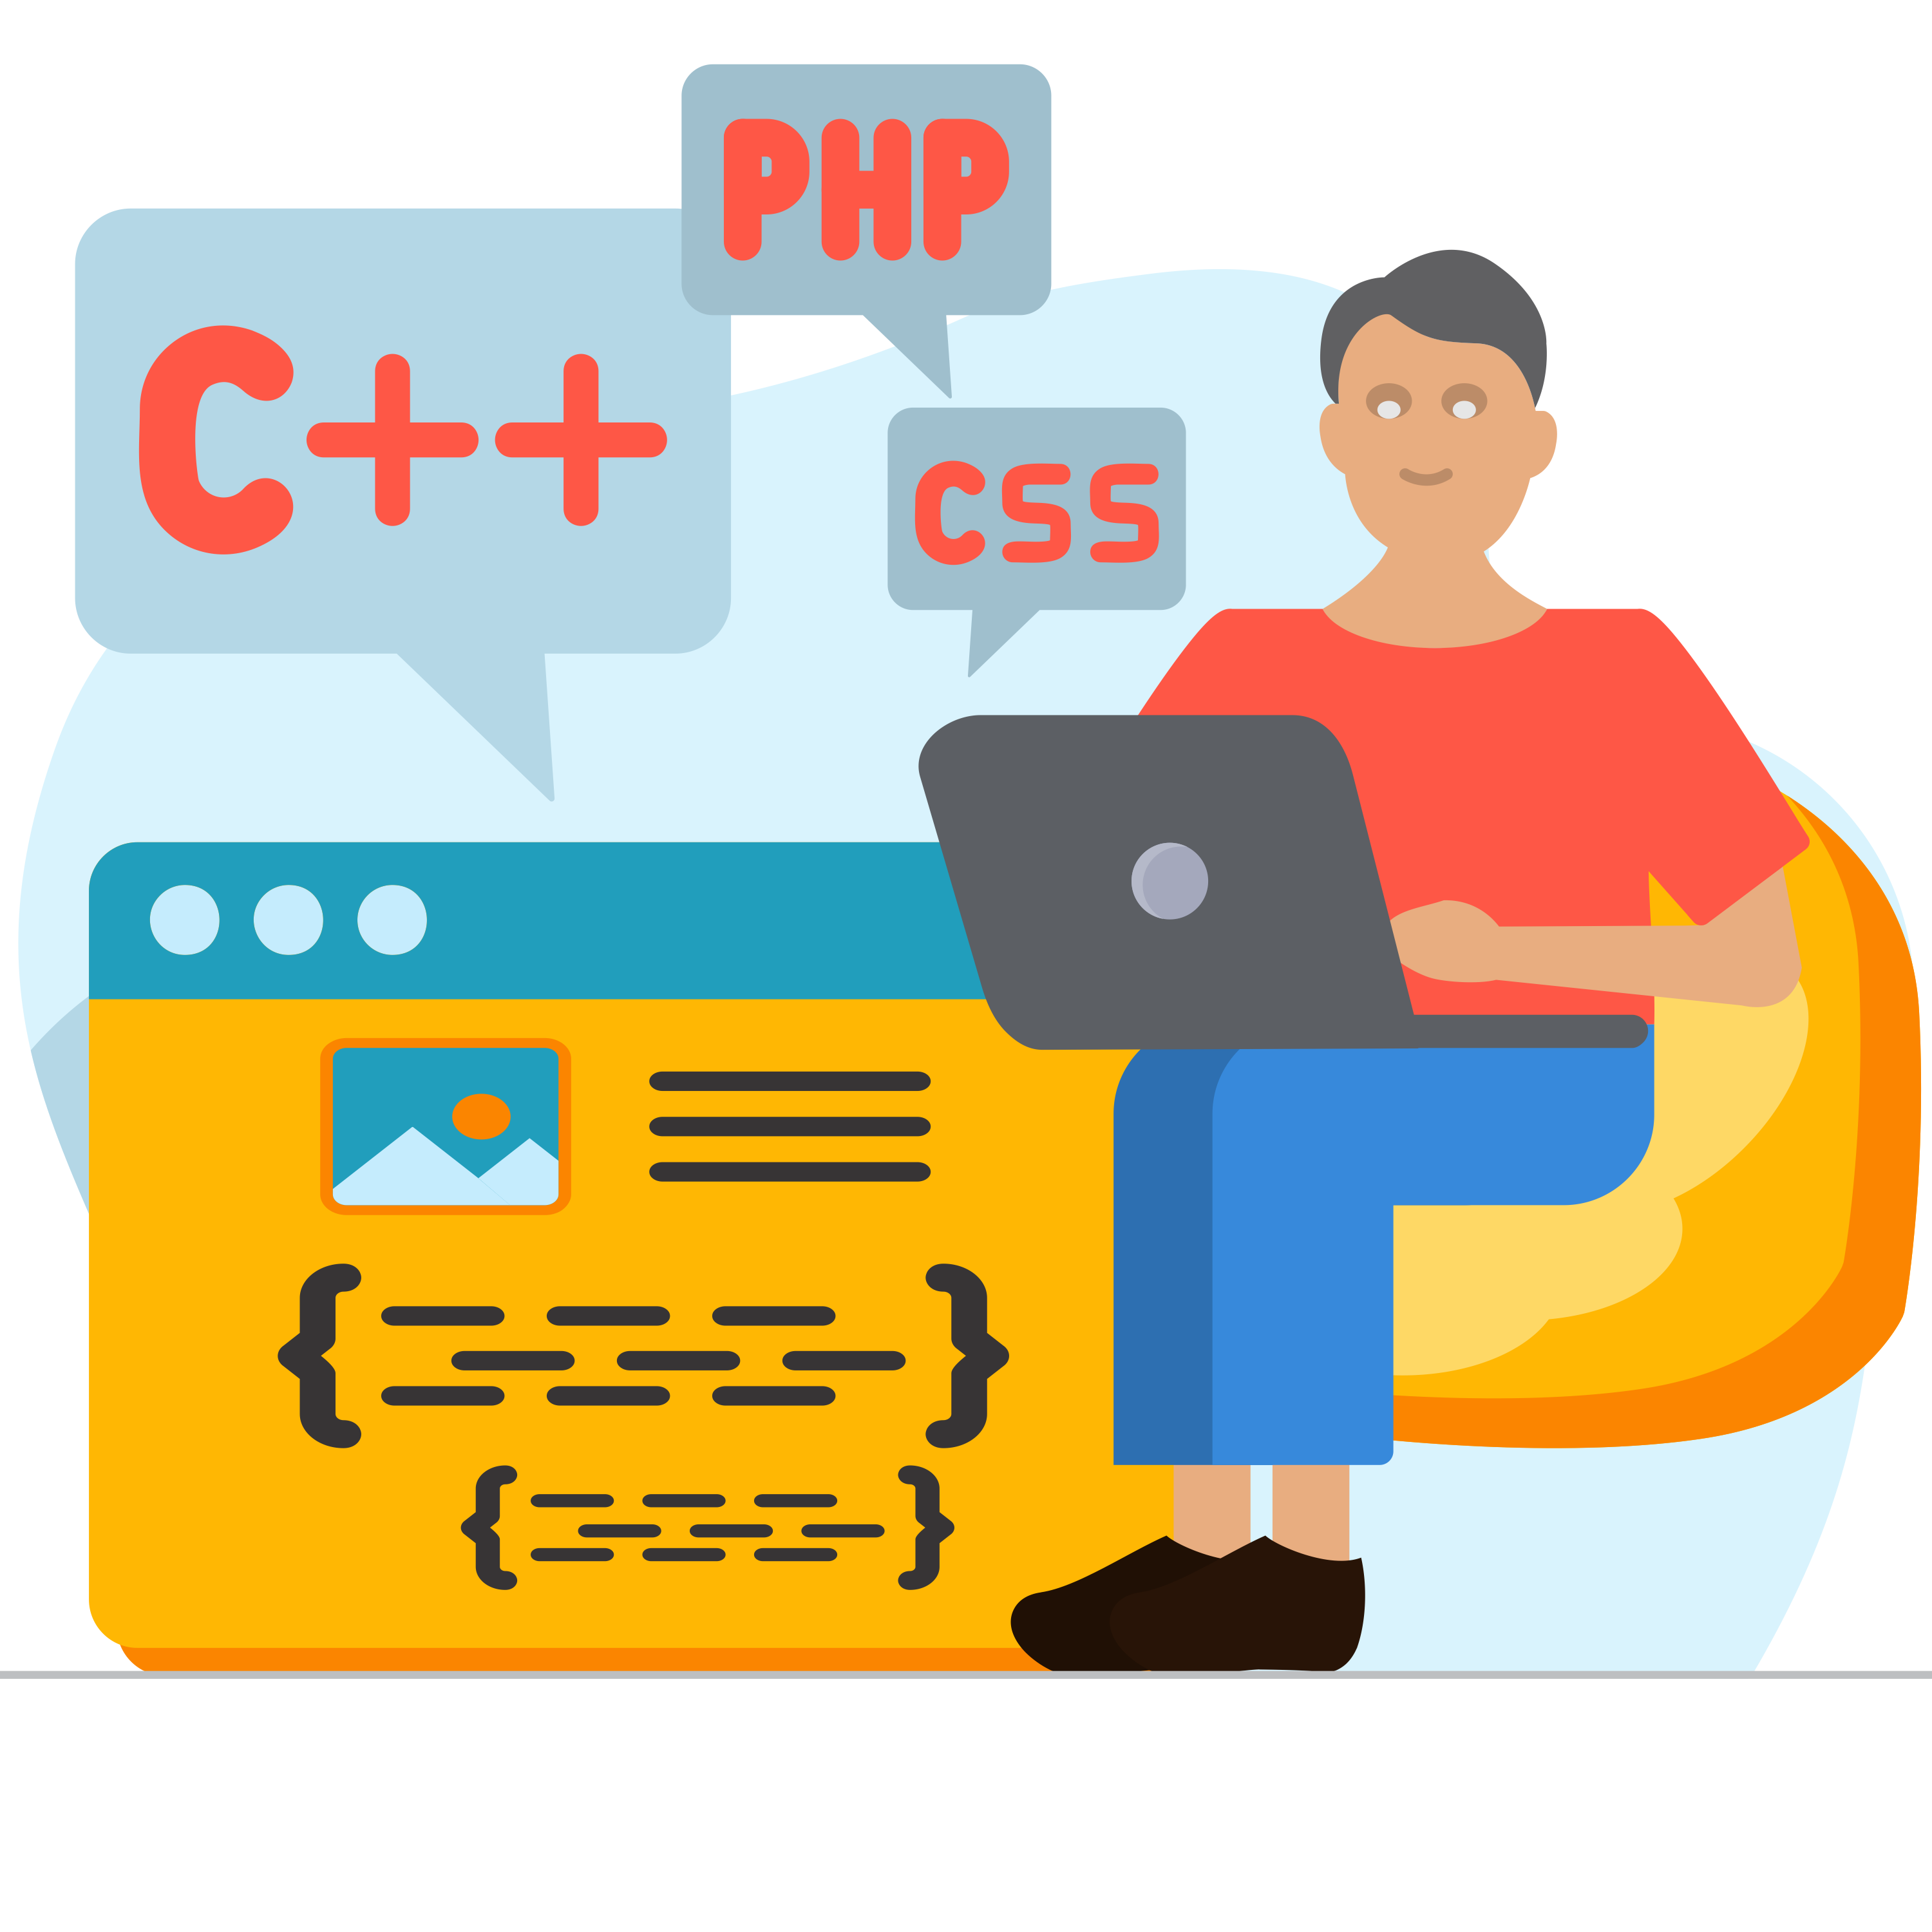 web-developver-c%2B%2B-css-php-web-development-programming-coding-illustration